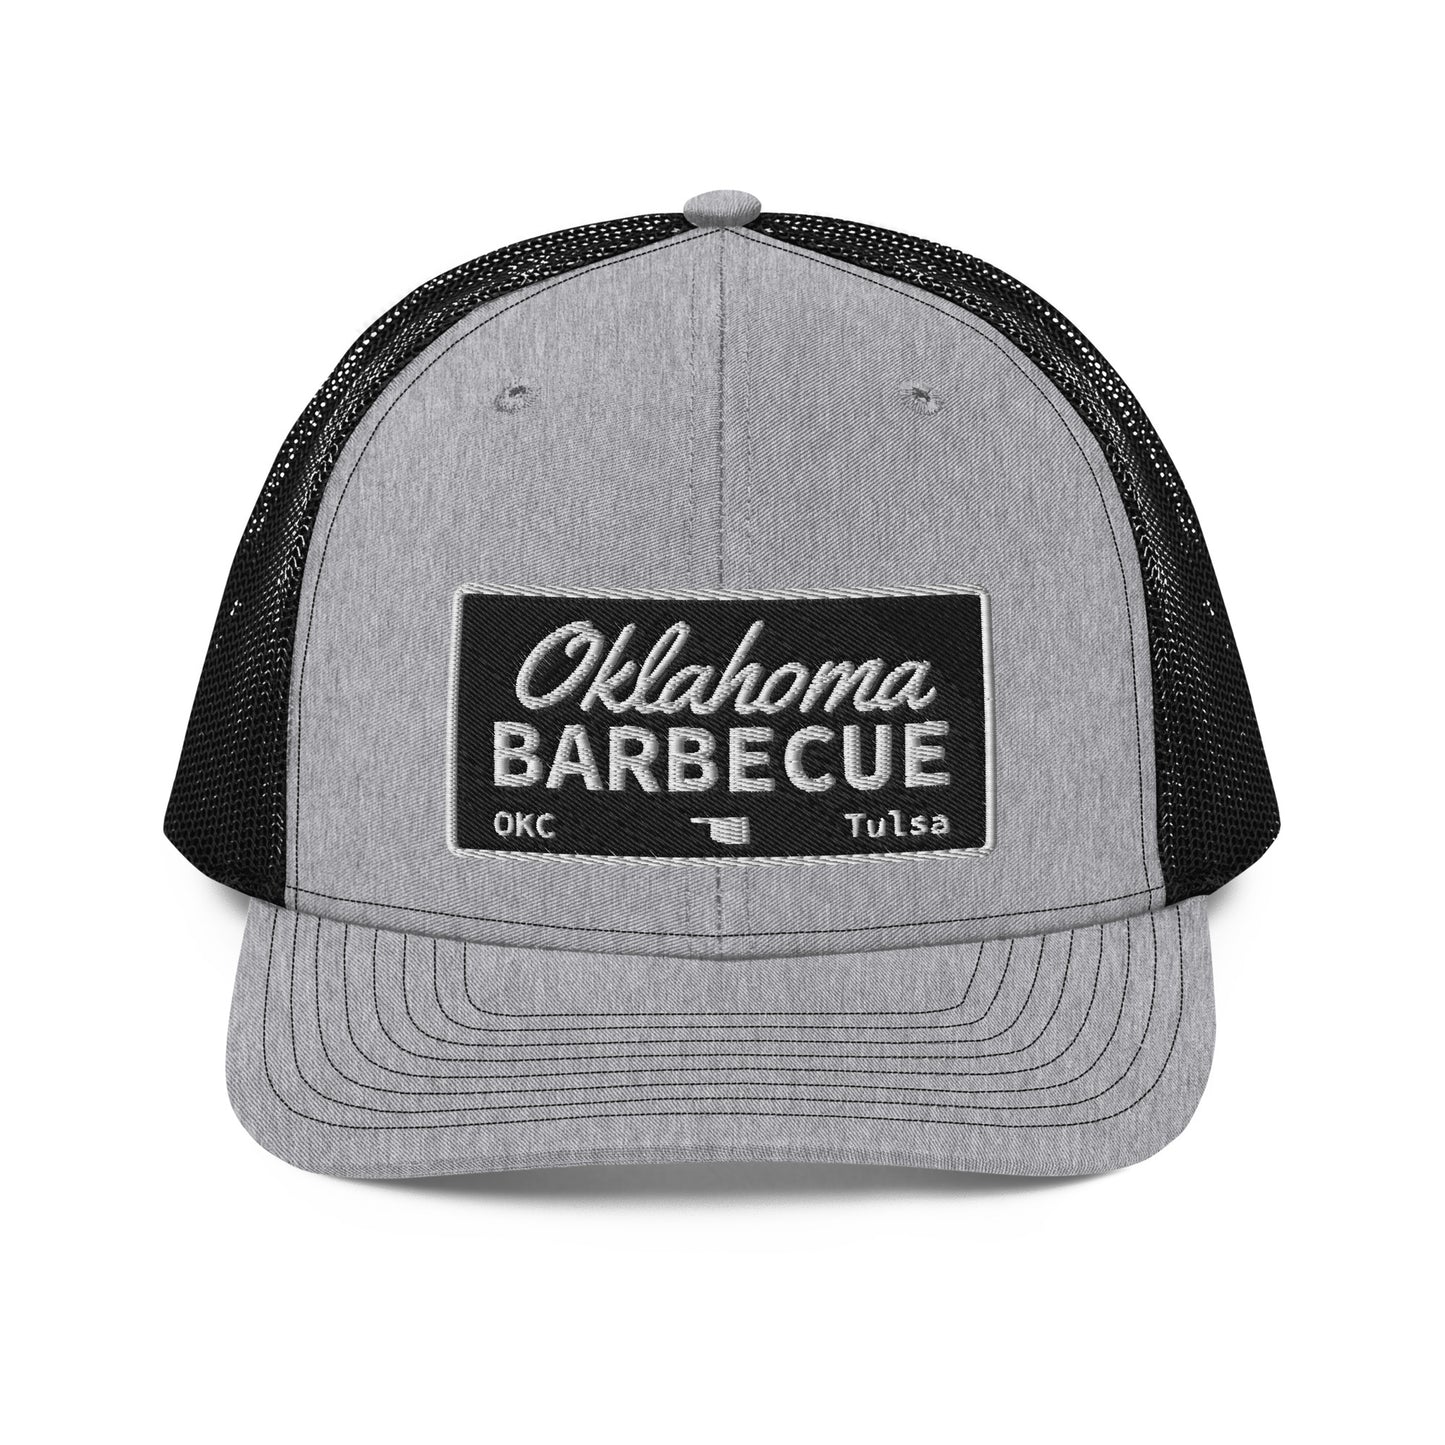 Oklahoma Barbecue Richardson Trucker hat.